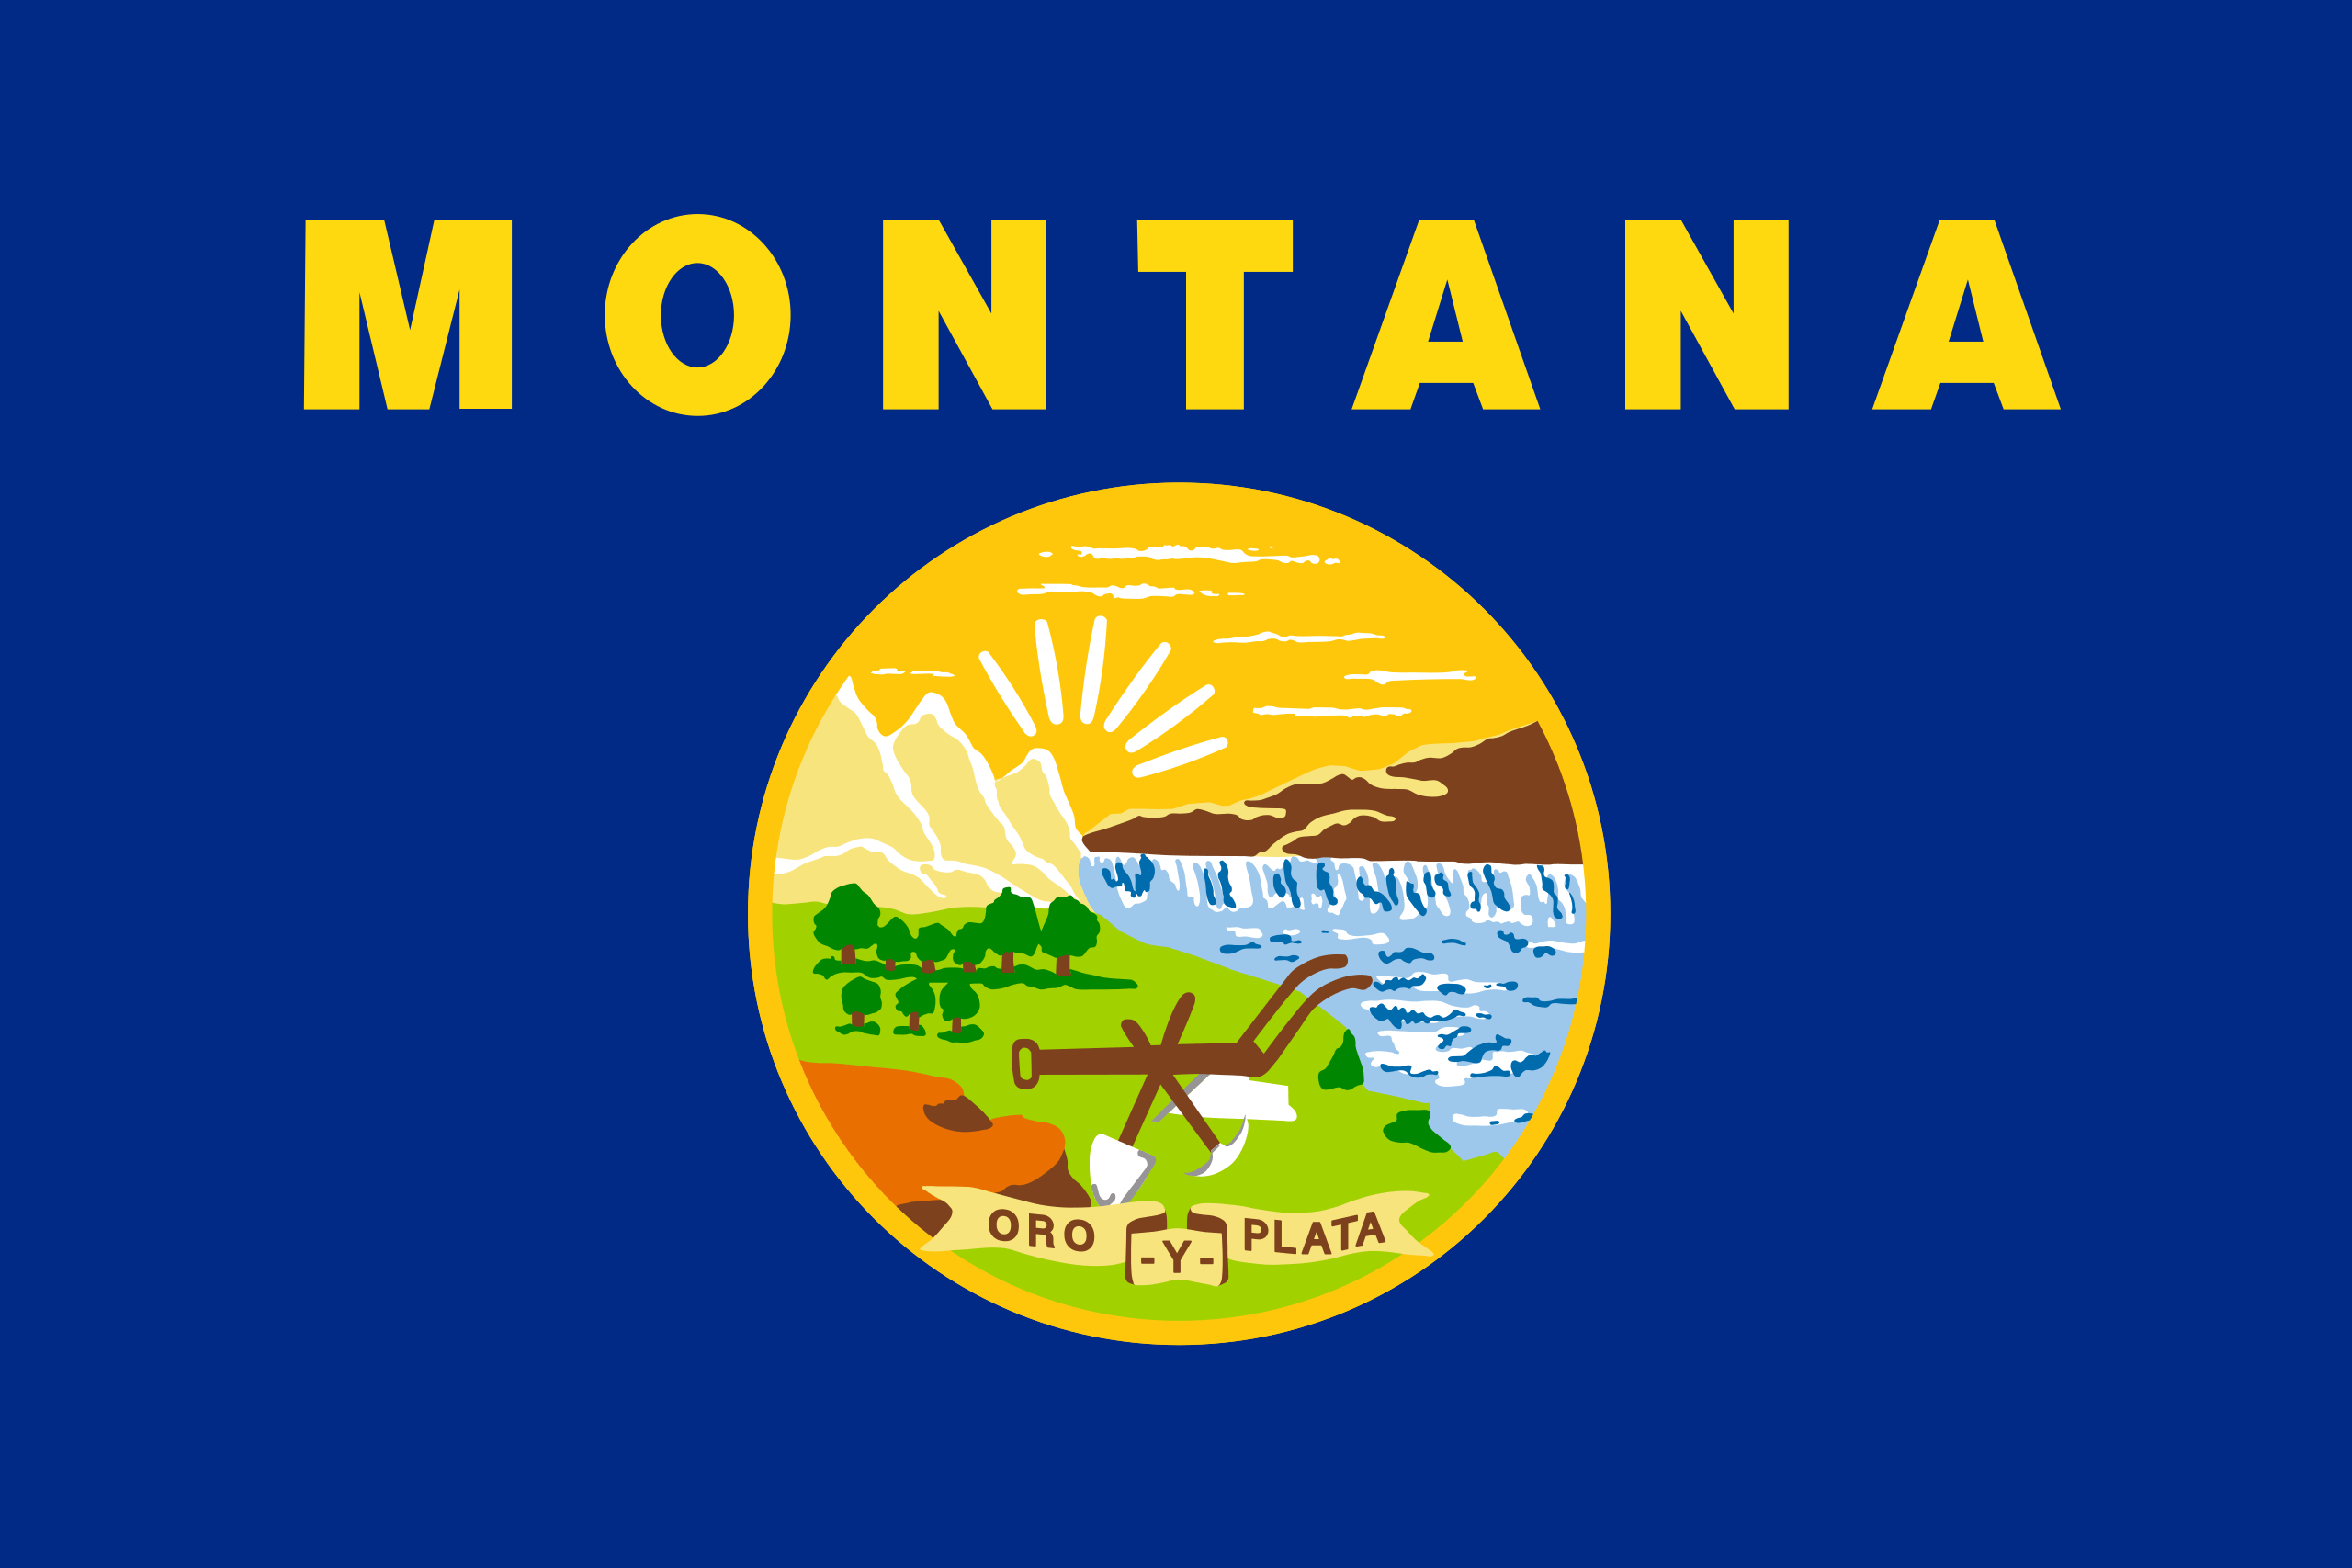 the Montana state flag